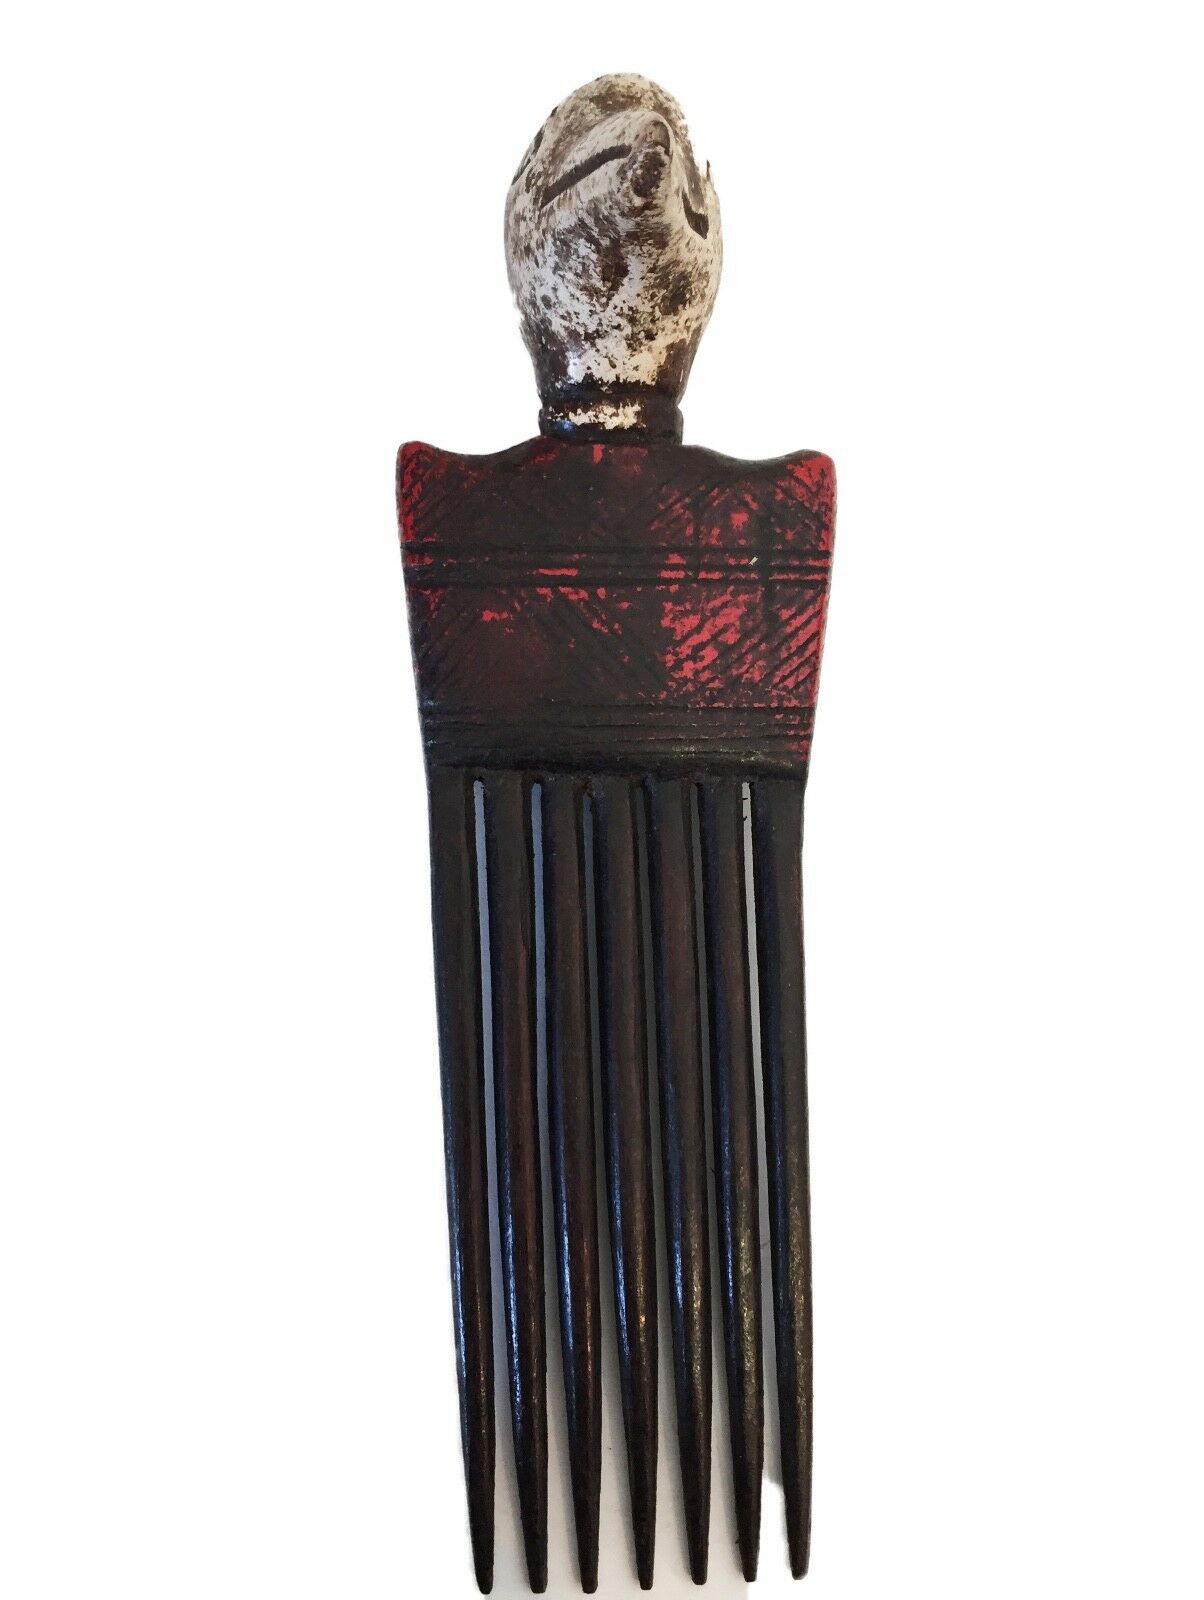 #727 African Baule I.Coast Comb W/ Bird Head Sculpture 9.25 " H